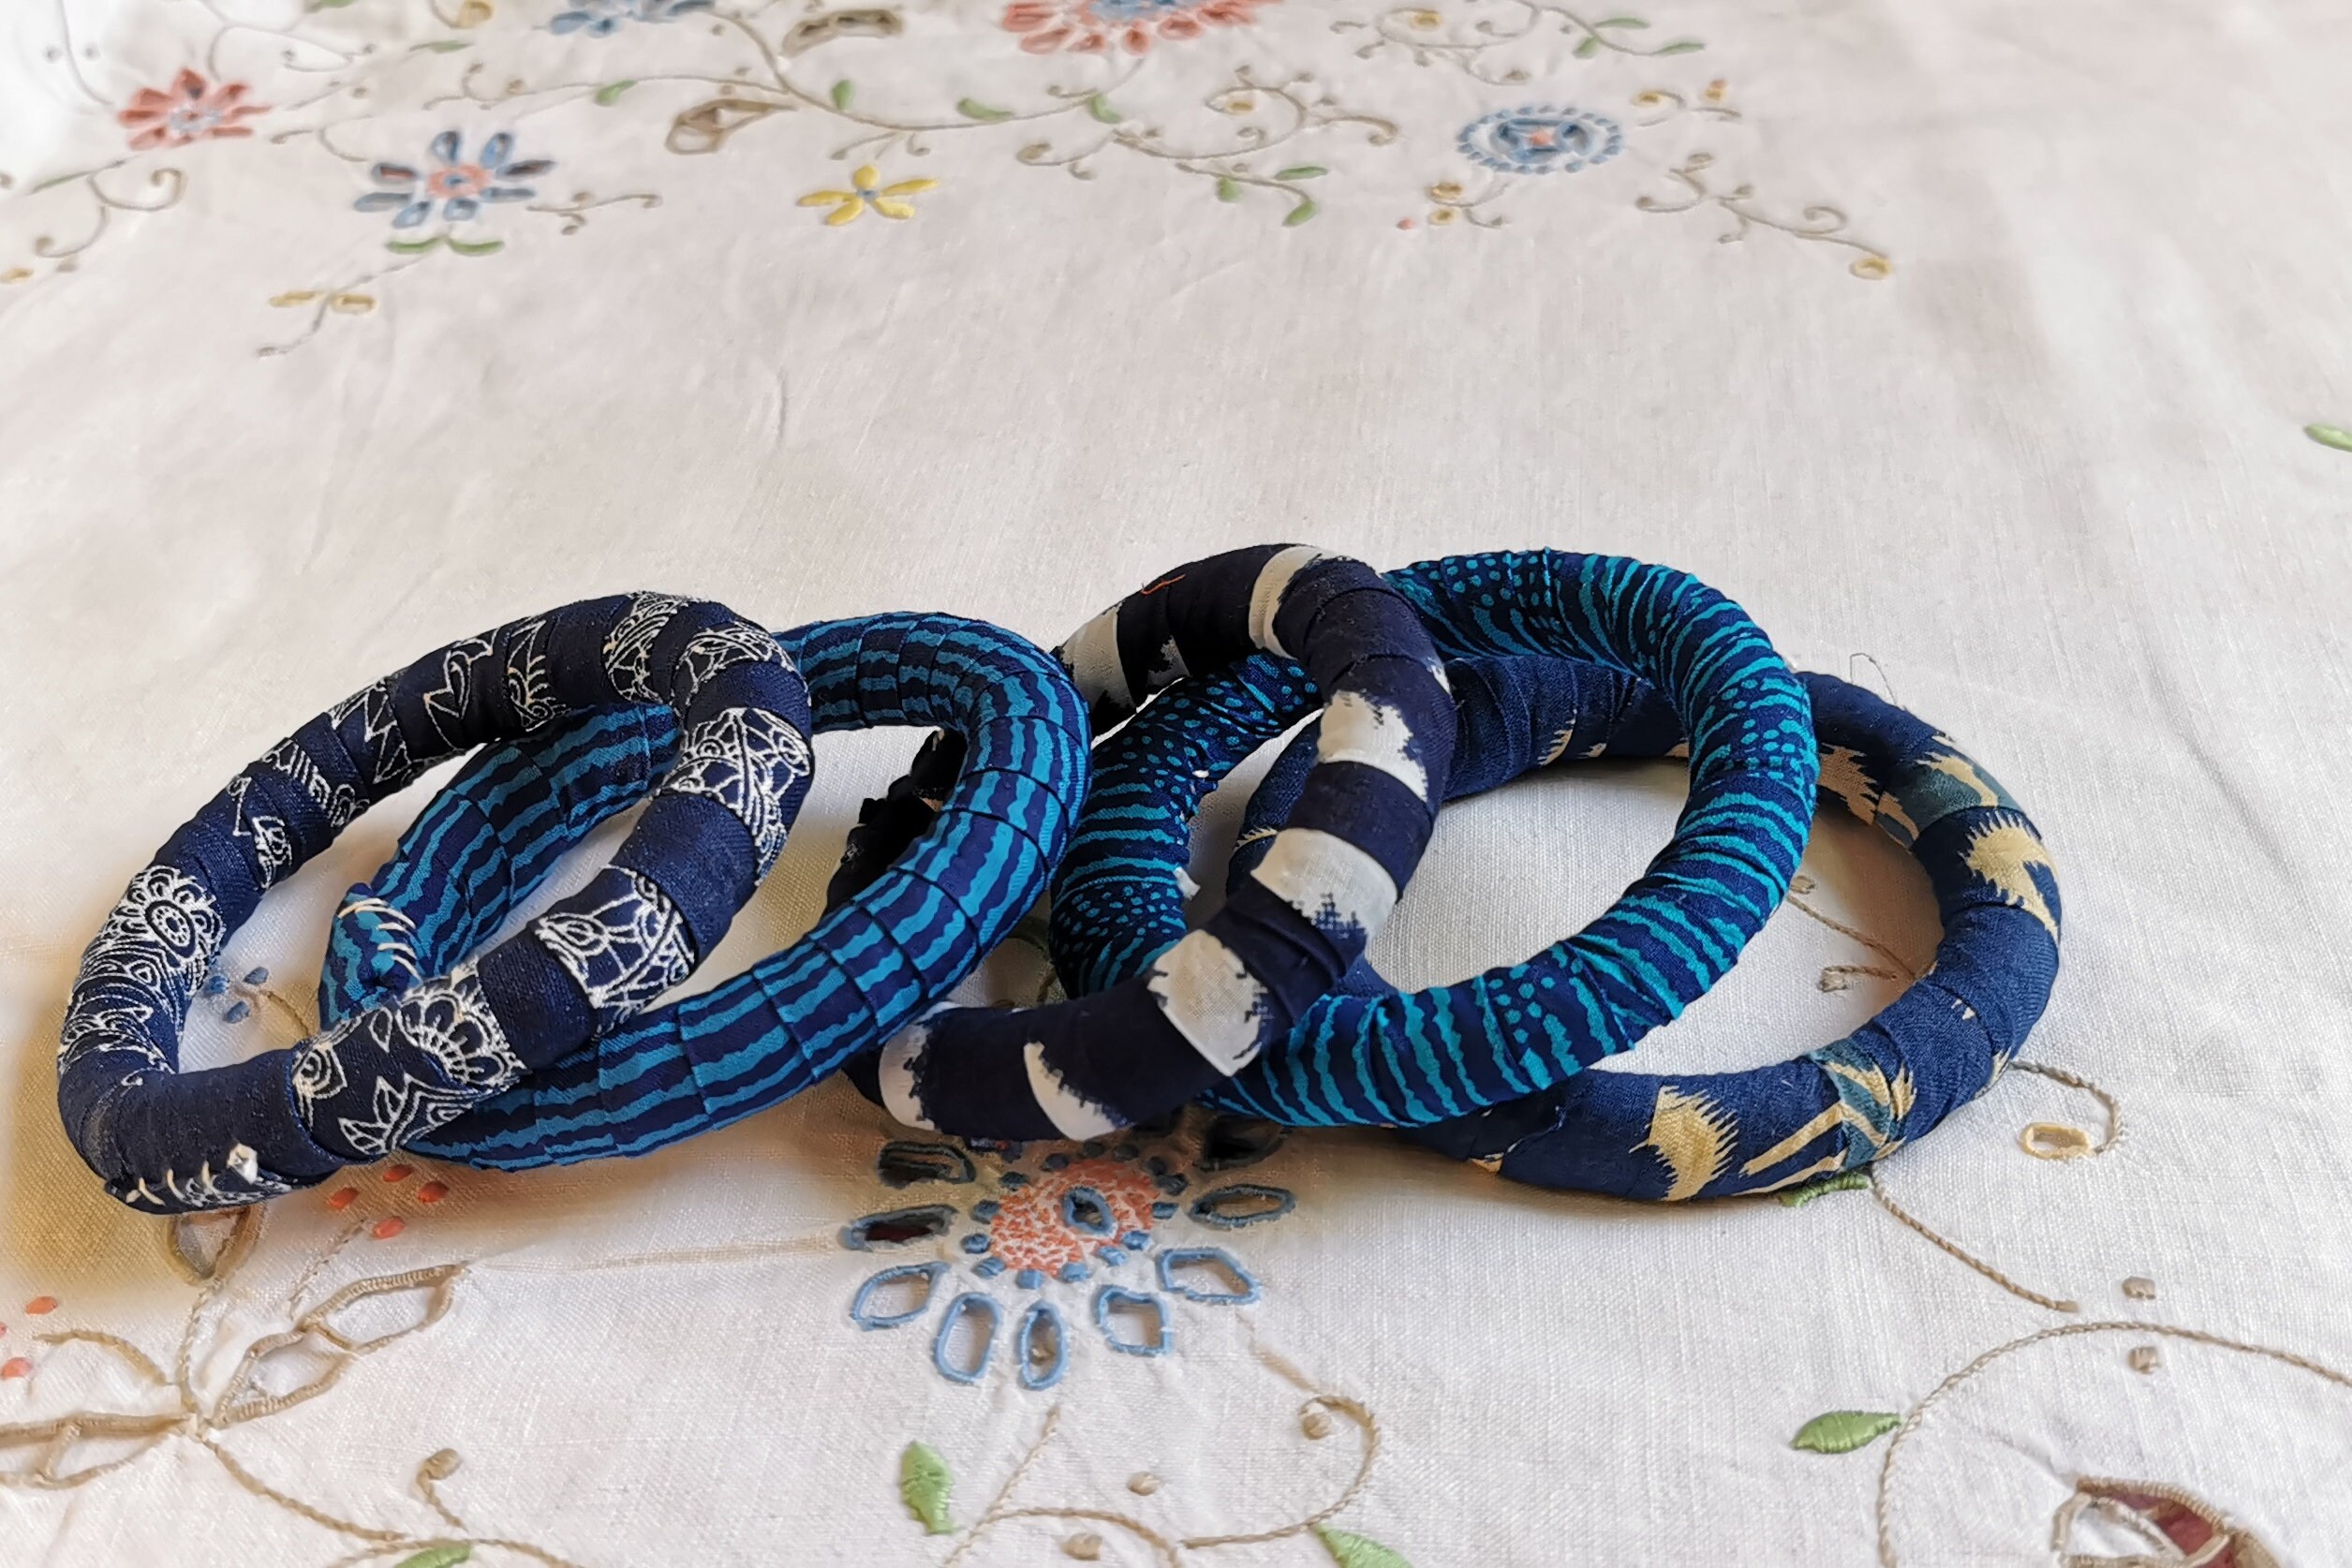 DIY Bangle Bracelet, DIY Bracelet Kits for Adults, Craft Kits for Teens,  Customize Wrap Fabric Bracelet, Jewellery Tutorial 